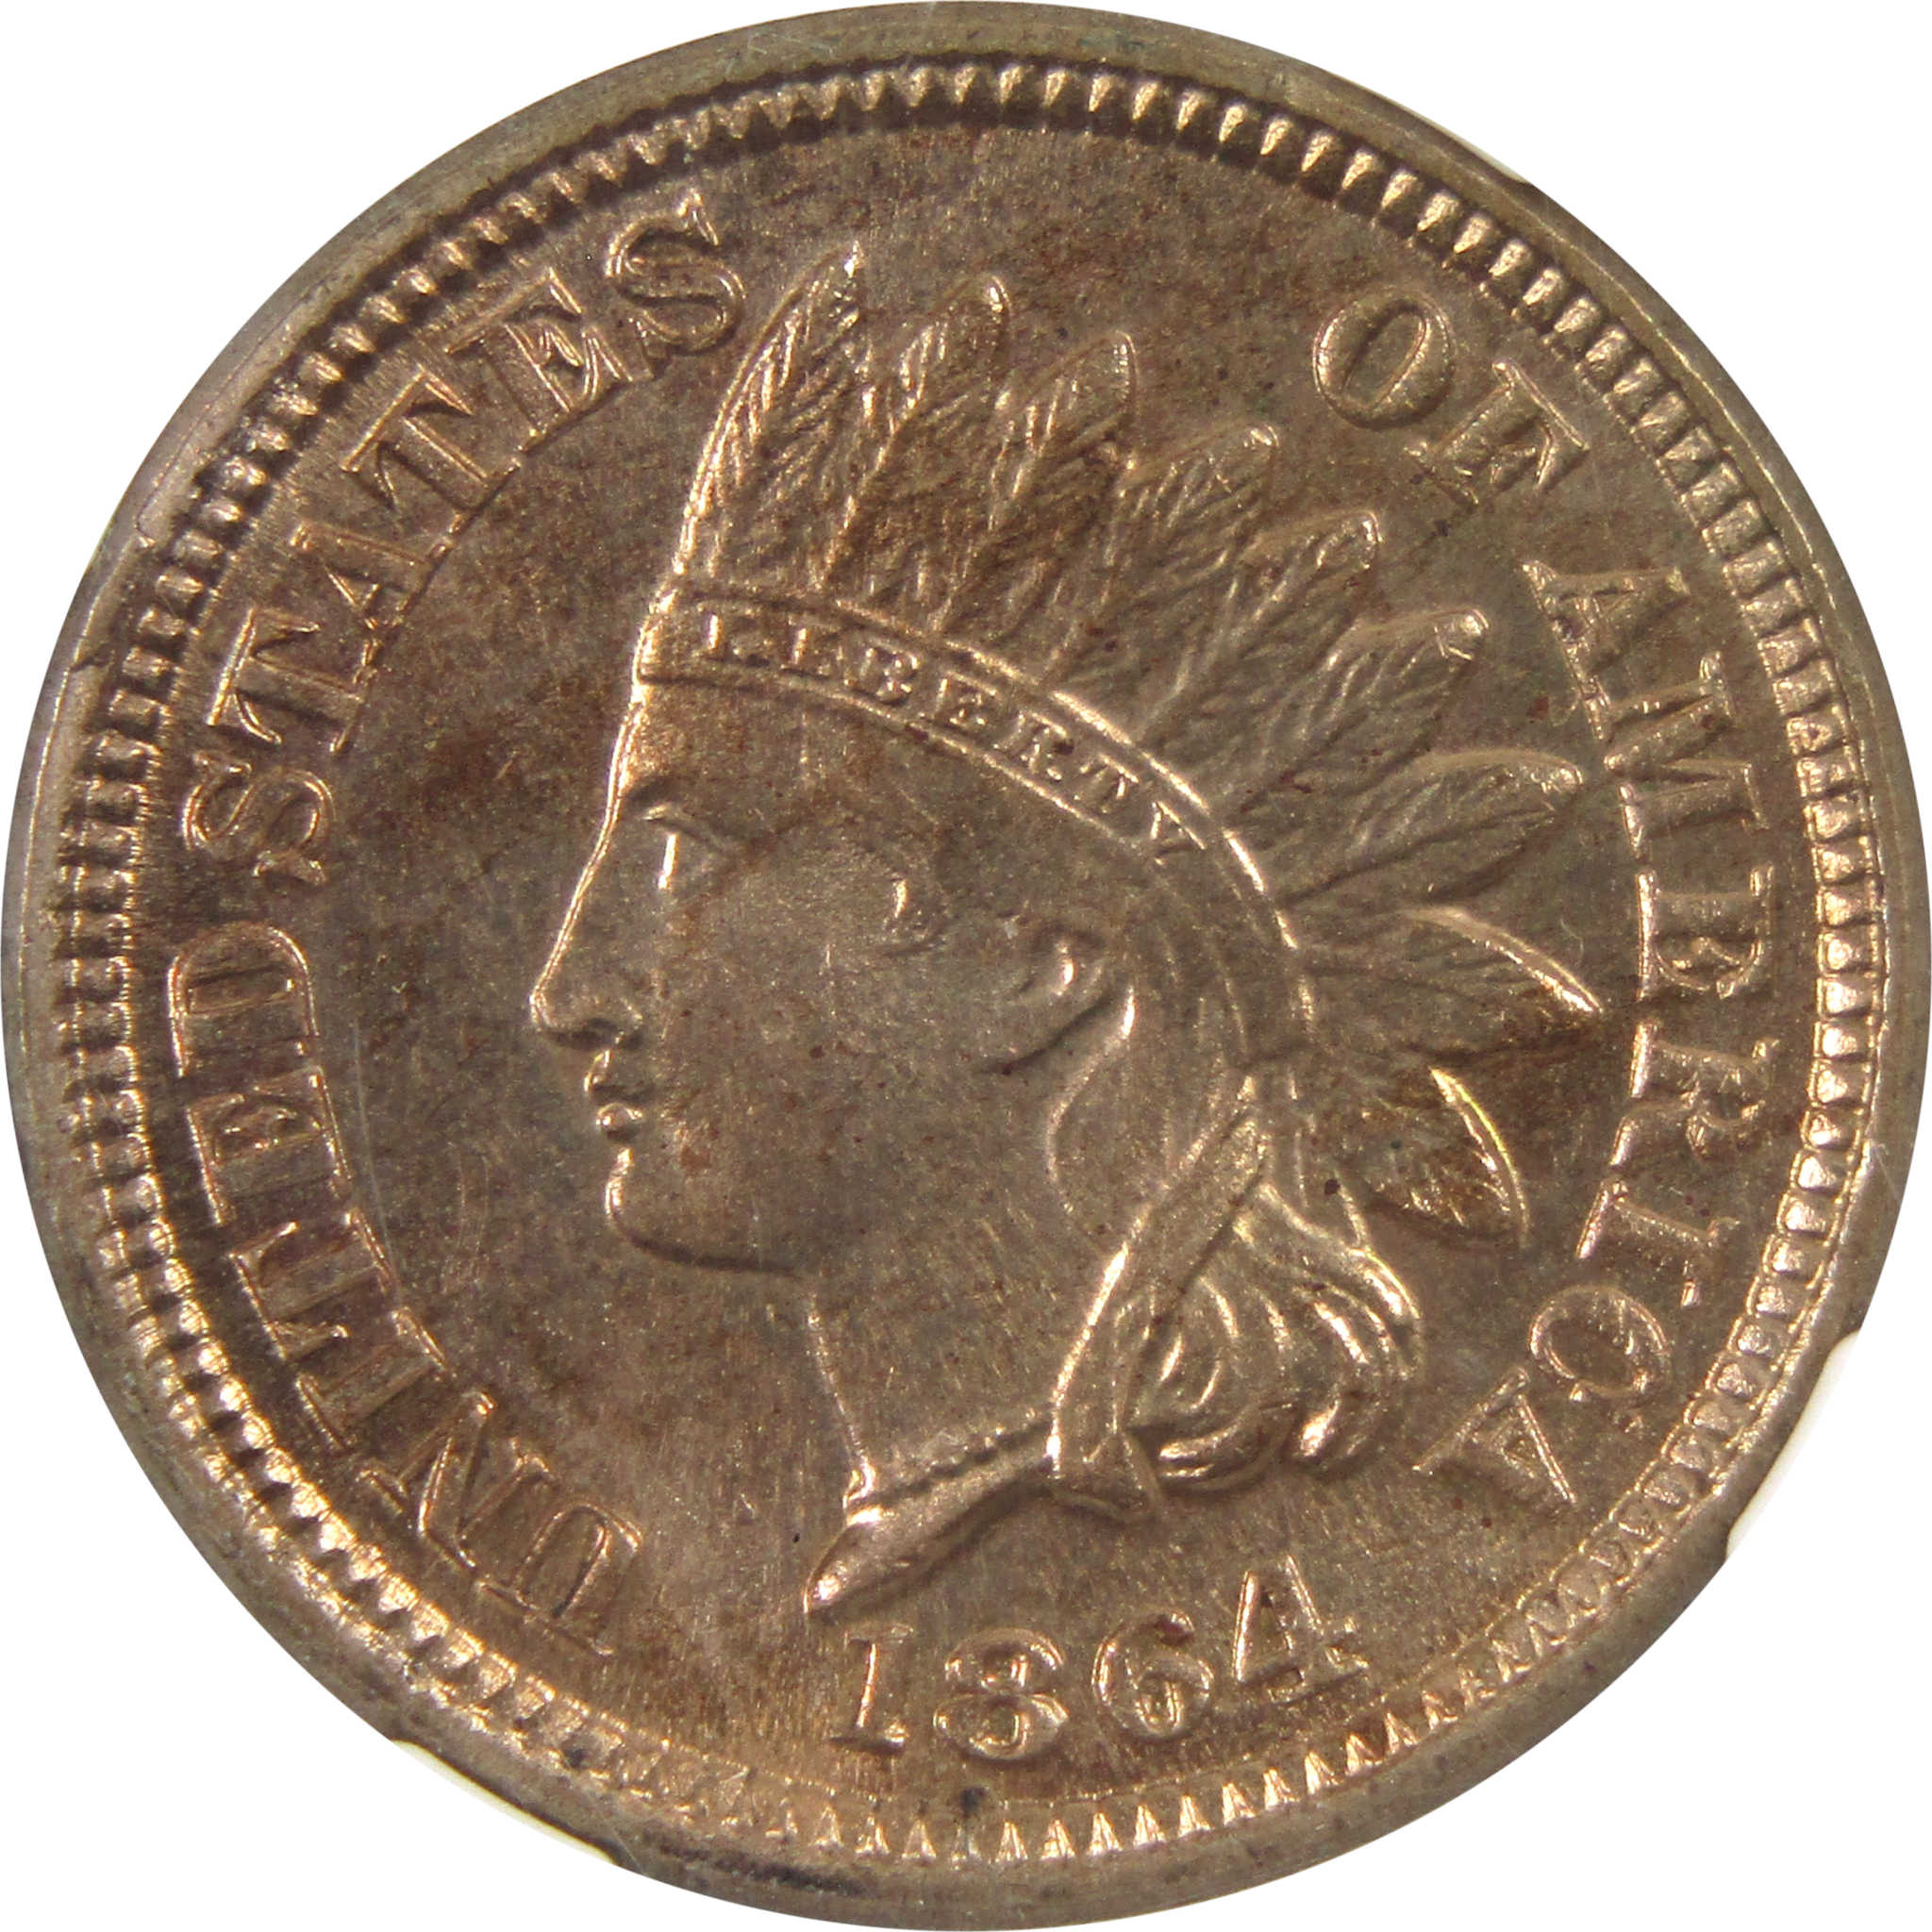 1864 Type 2 Indian Head Cent MS 63 NGC Copper-Nickel 1c Unc SKU:I9195